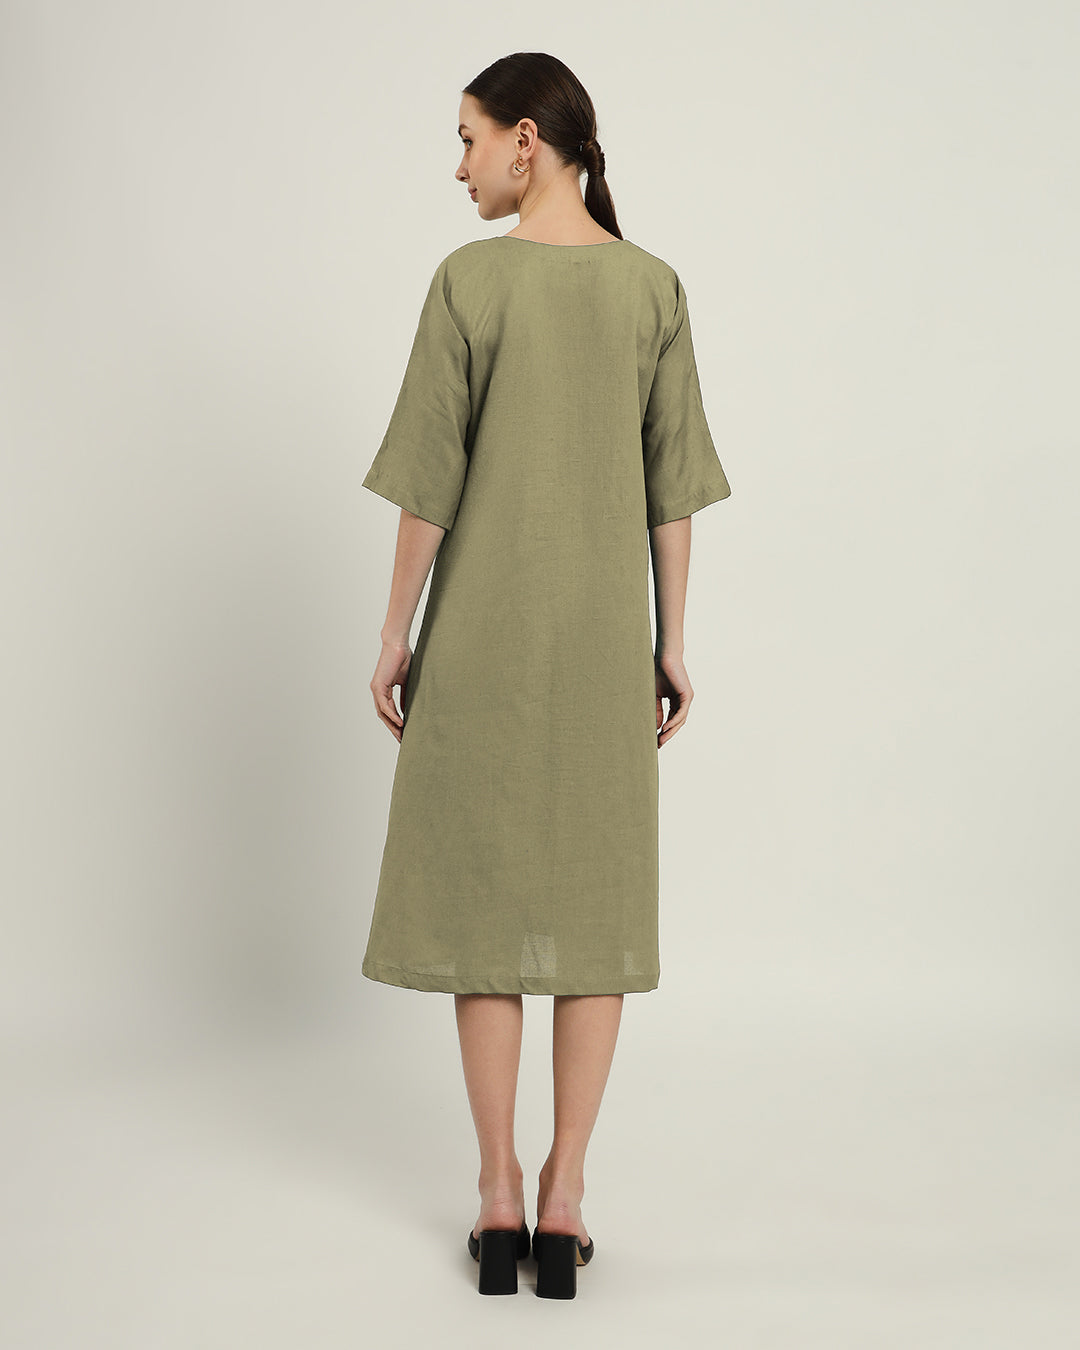 The Mildura Daisy Olive Linen Dress